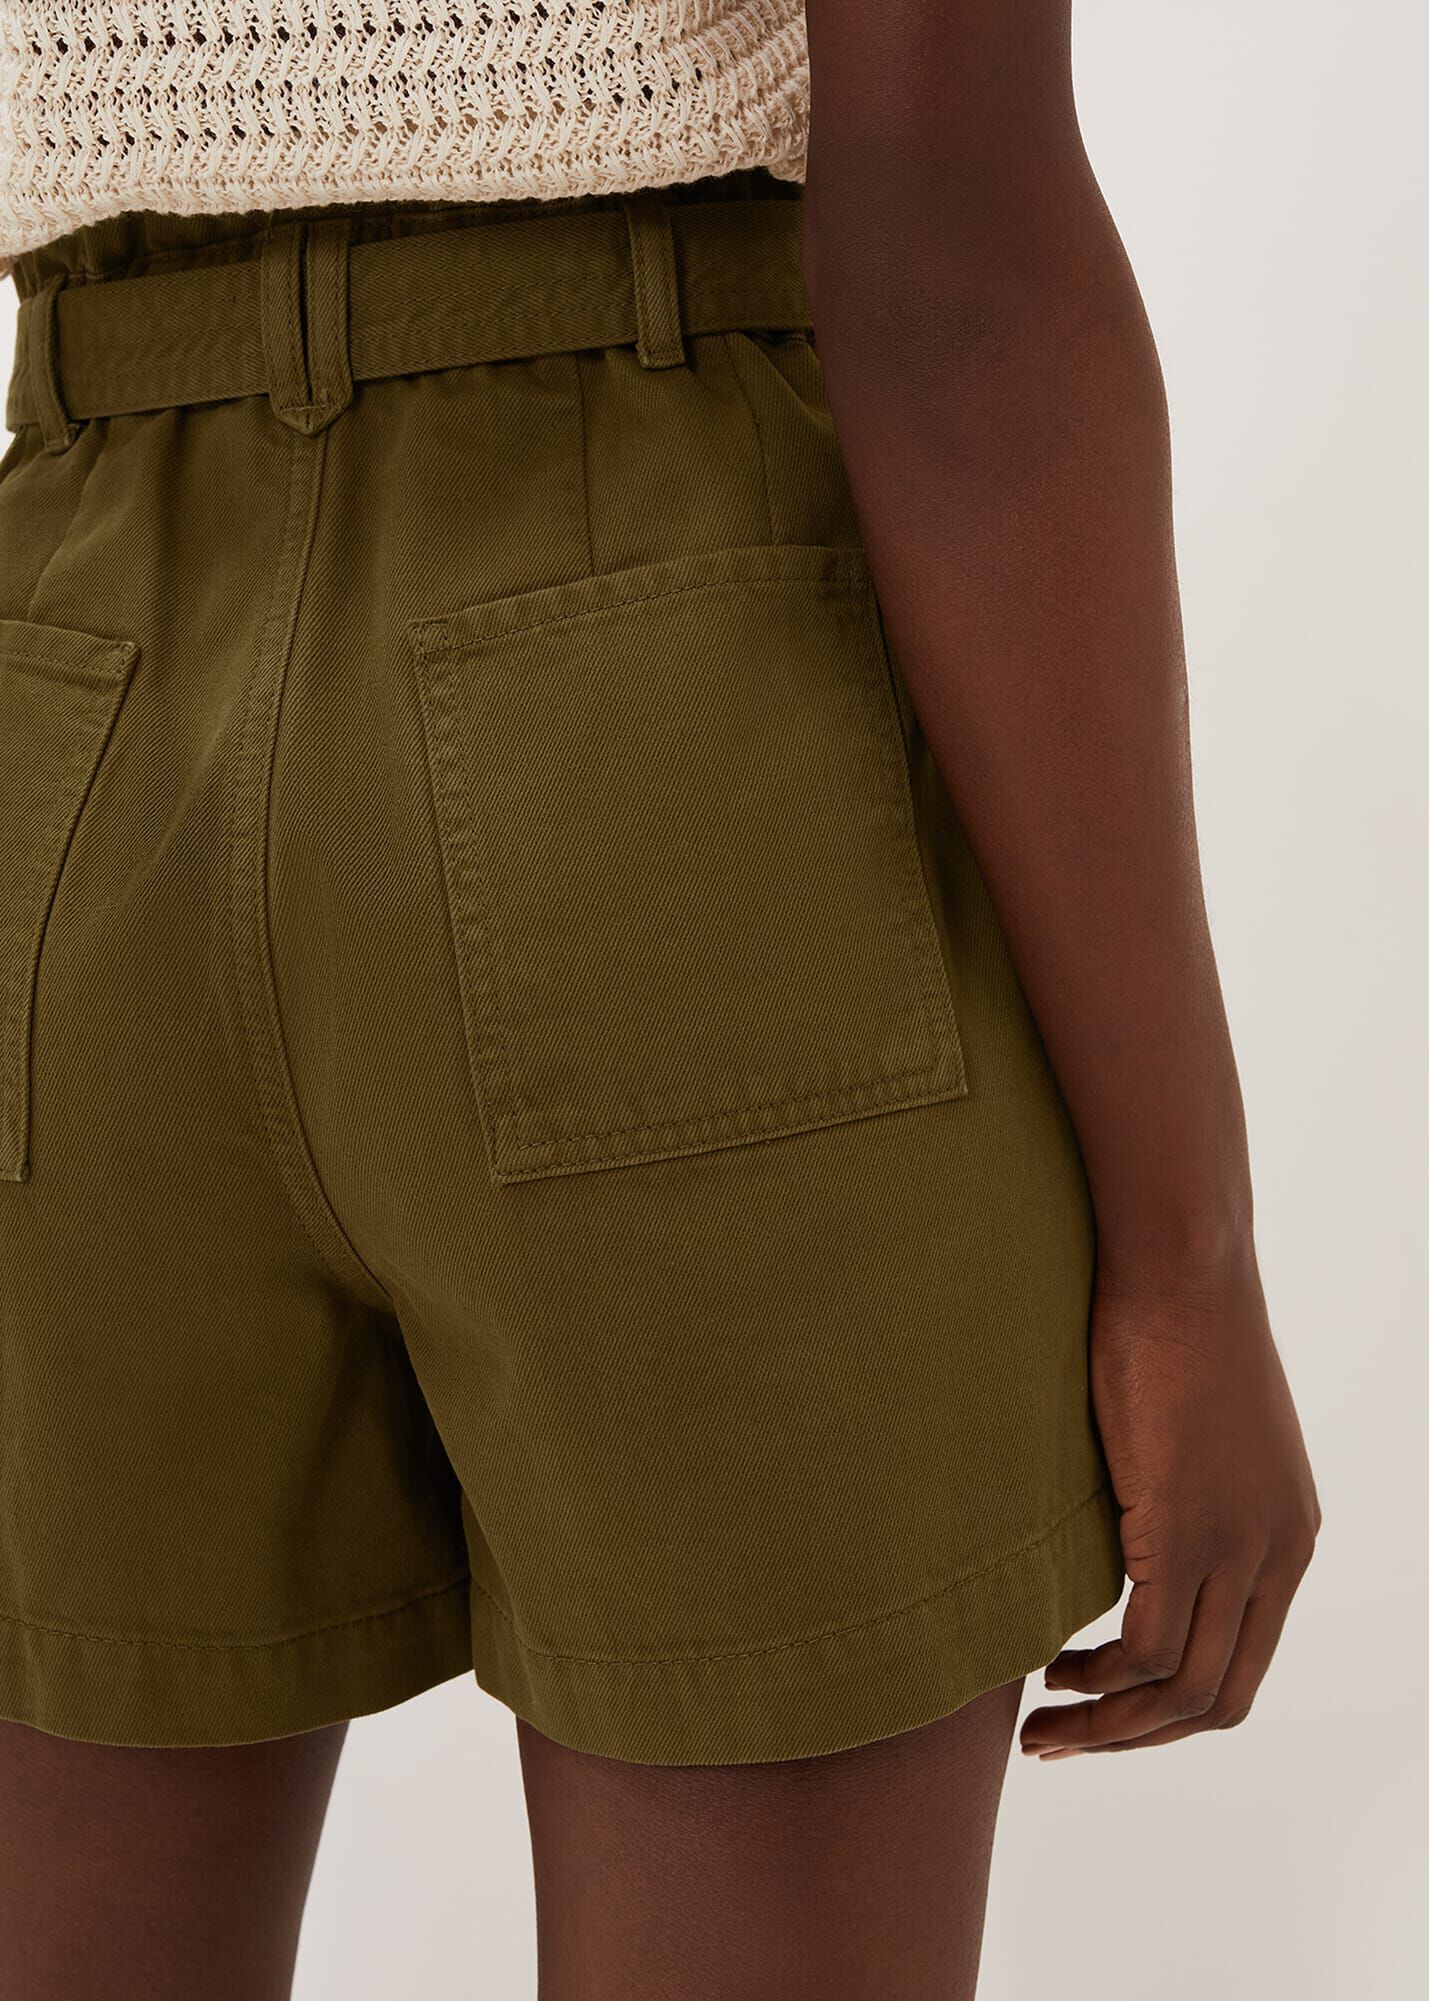 Natural Phase Eight Cotton s Pollie Denim Cargo Shorts in Khaki Womens Clothing Shorts Cargo shorts 